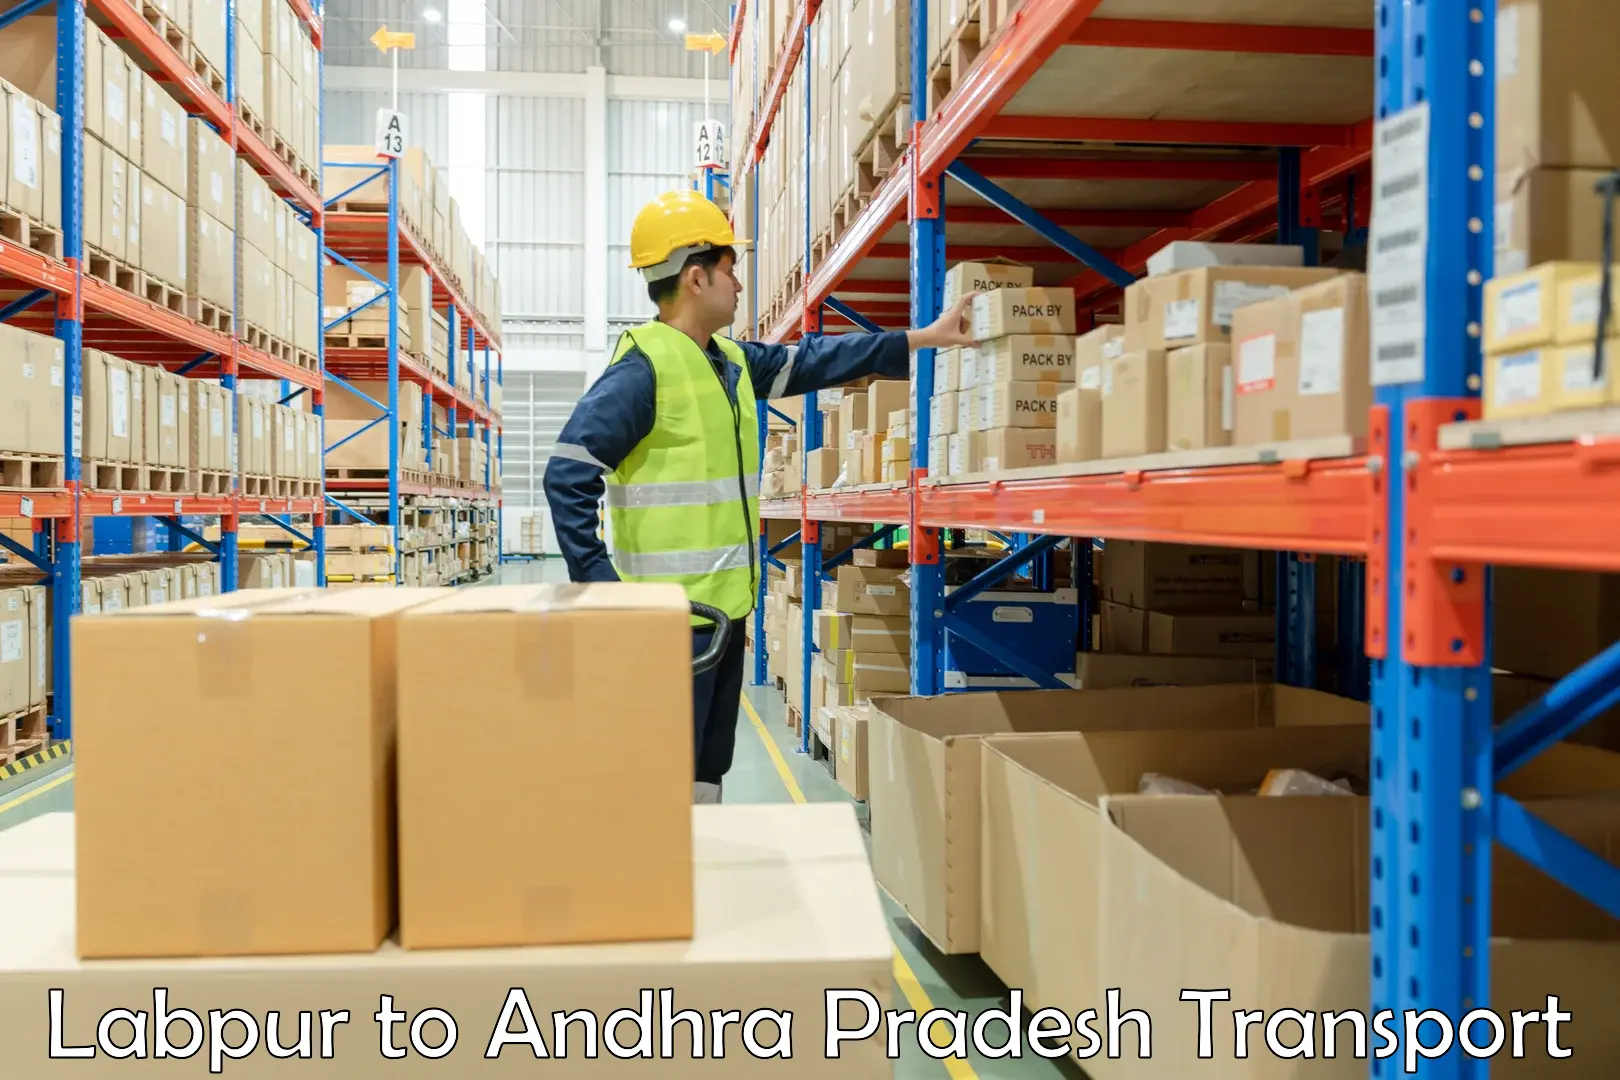 Cargo transportation services Labpur to Guntur